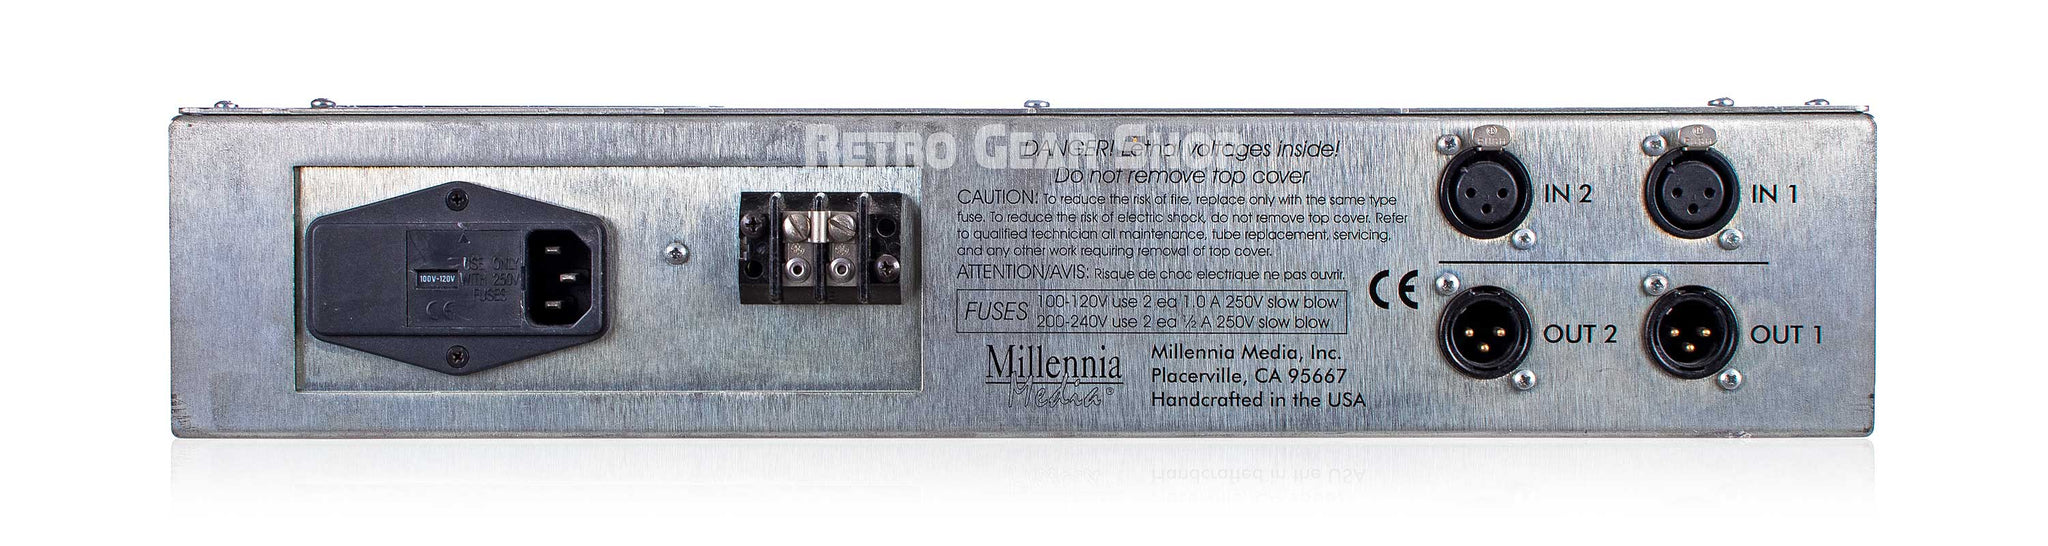 Millennia Media NSEQ-2 Rear 307